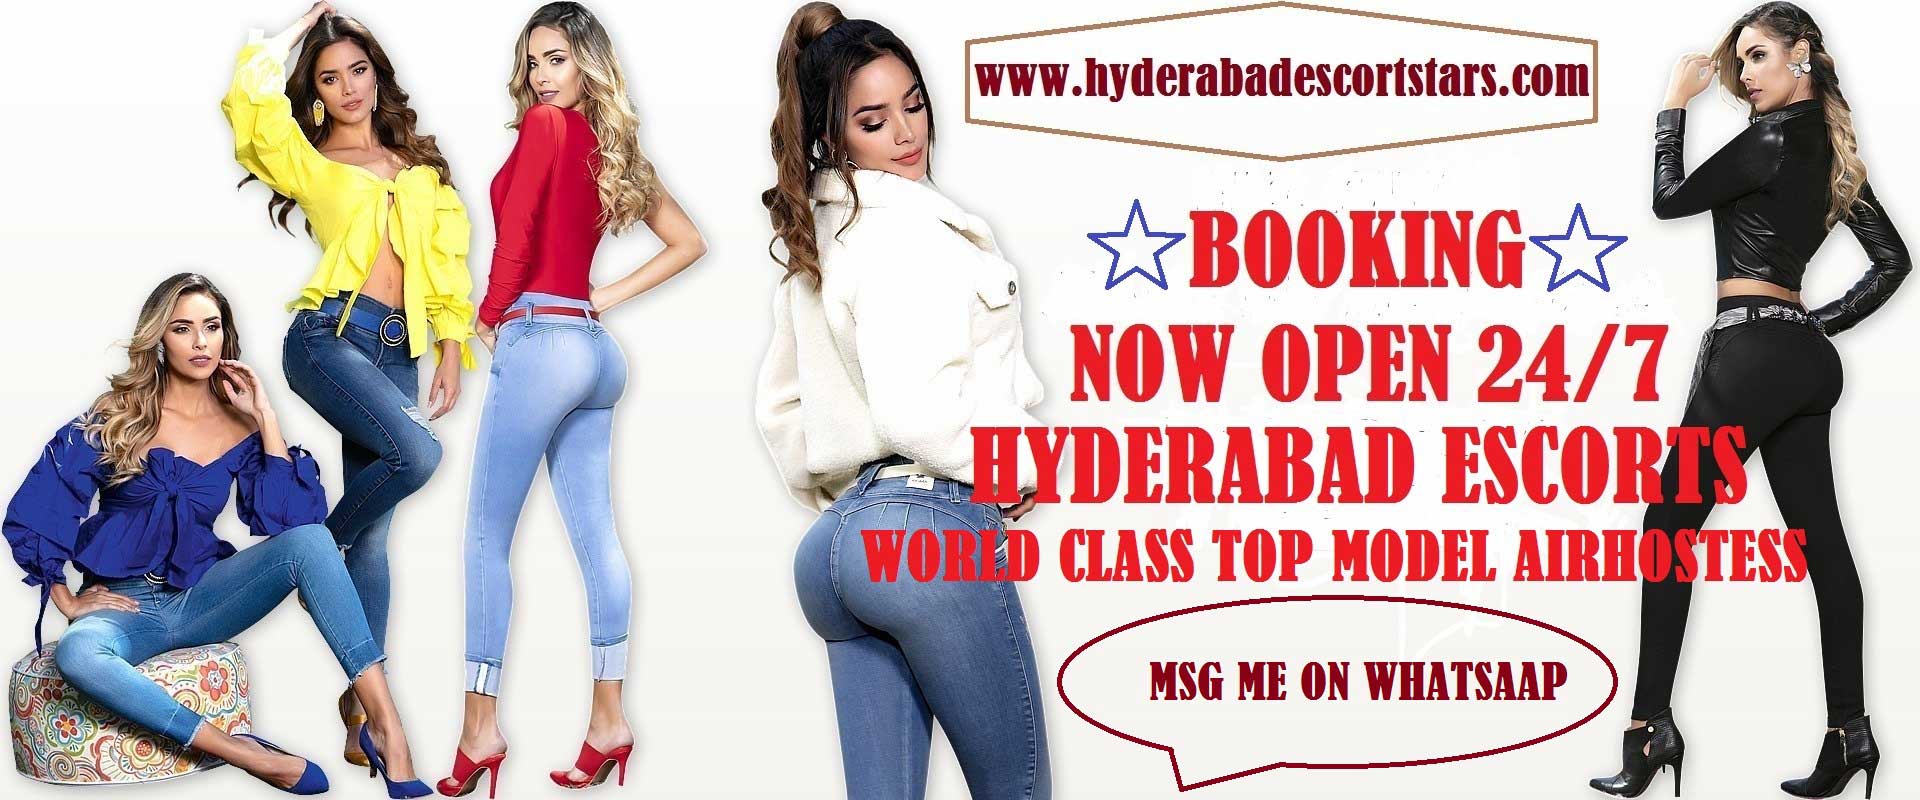 Hyderabad Escorts | Hyderabad Escort Star Agency Open 24/7